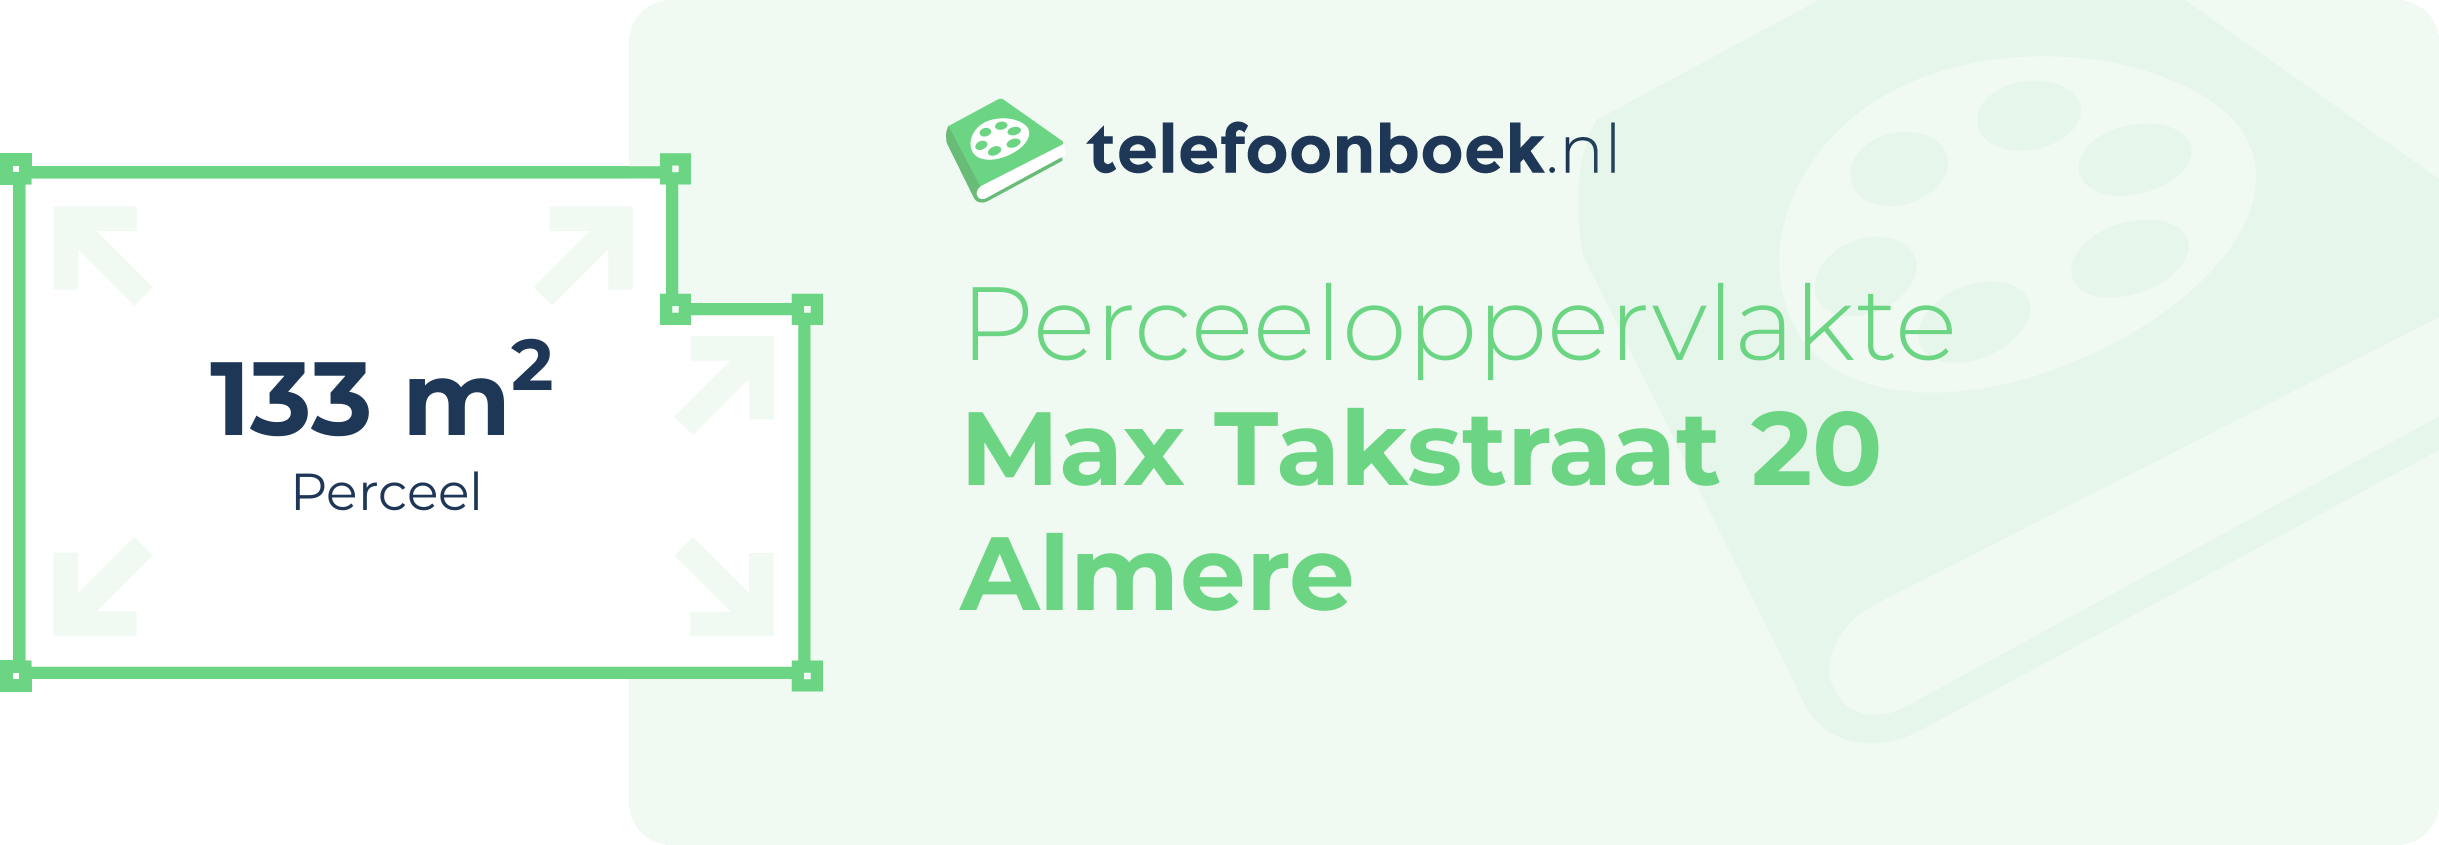 Perceeloppervlakte Max Takstraat 20 Almere